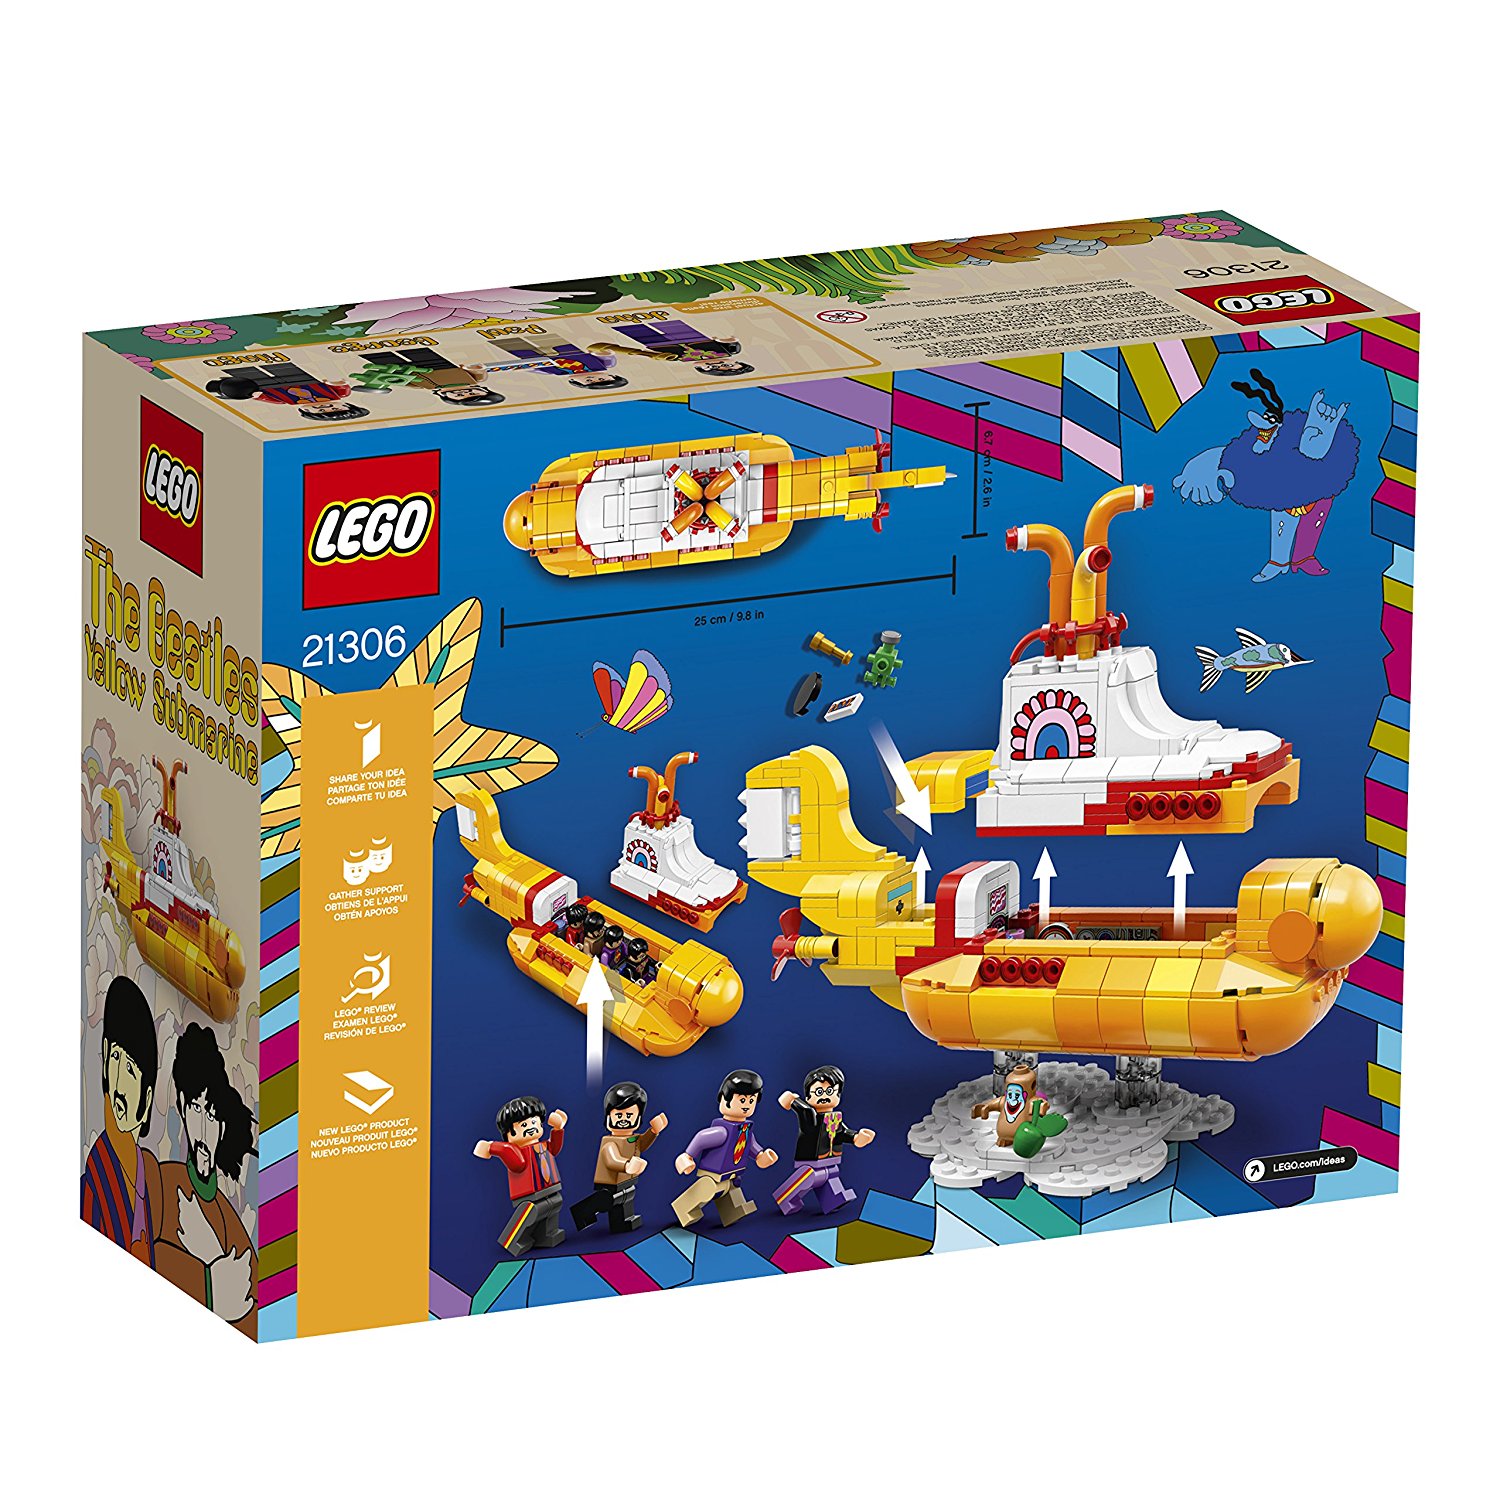 21306 LEGO Ideas  Yellow Submarine